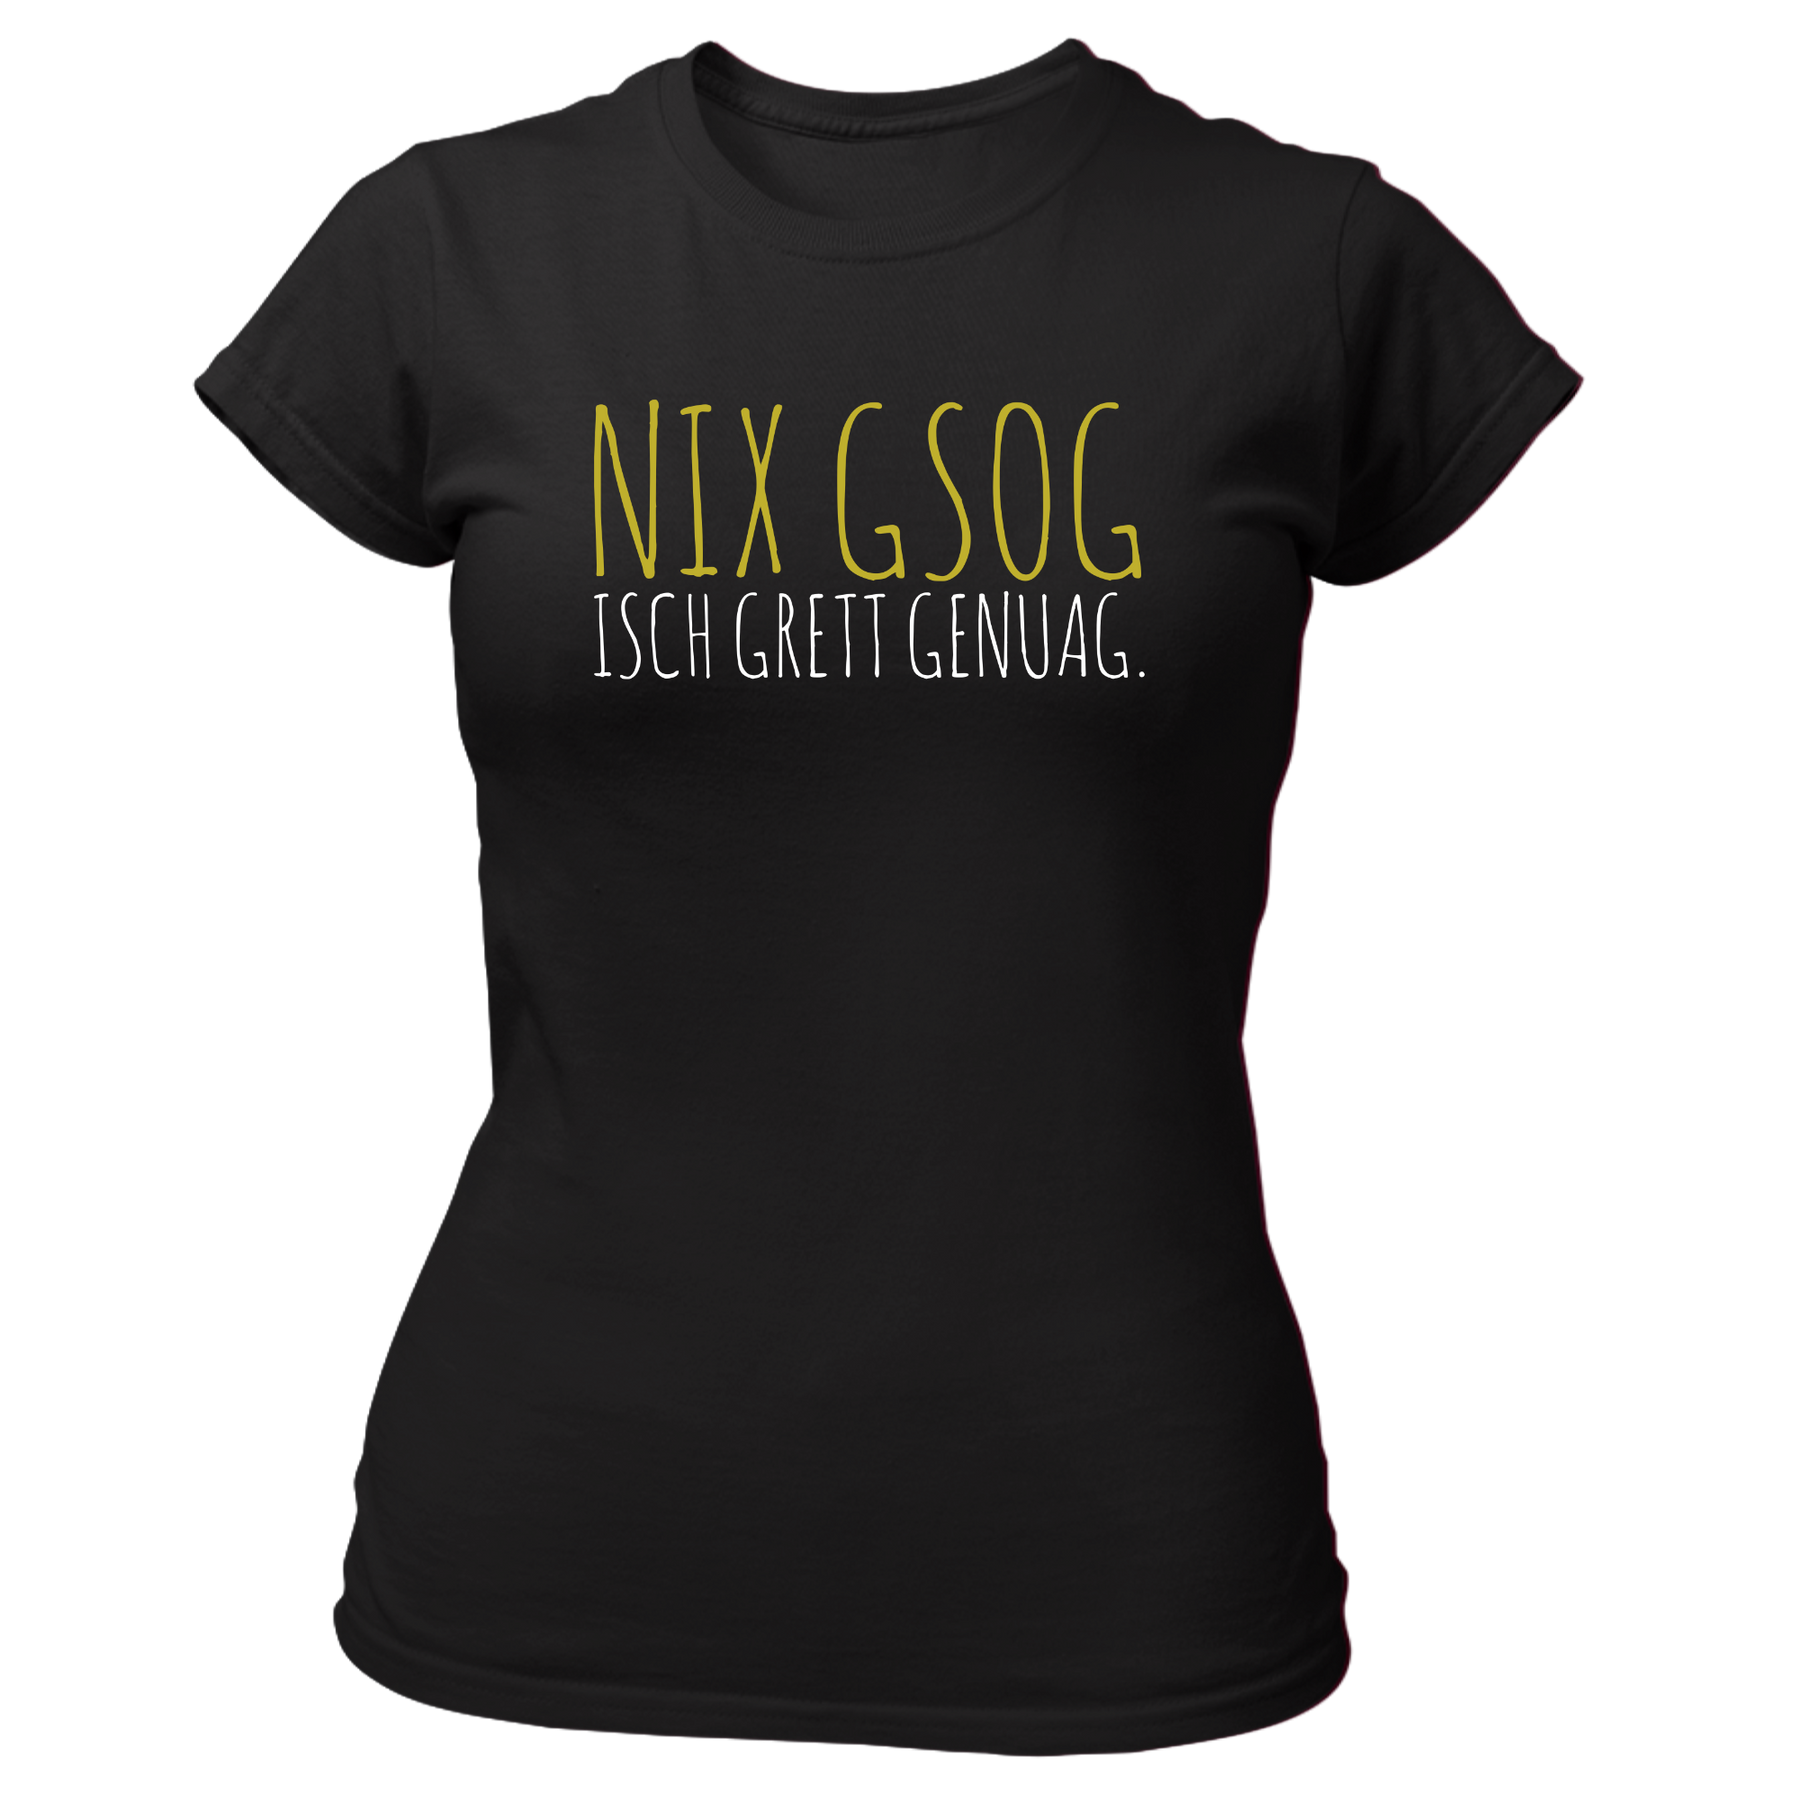 Nix gsog isch grett genuag - Damen Shirt Bio - XS / Schwarz - Shirts & Tops